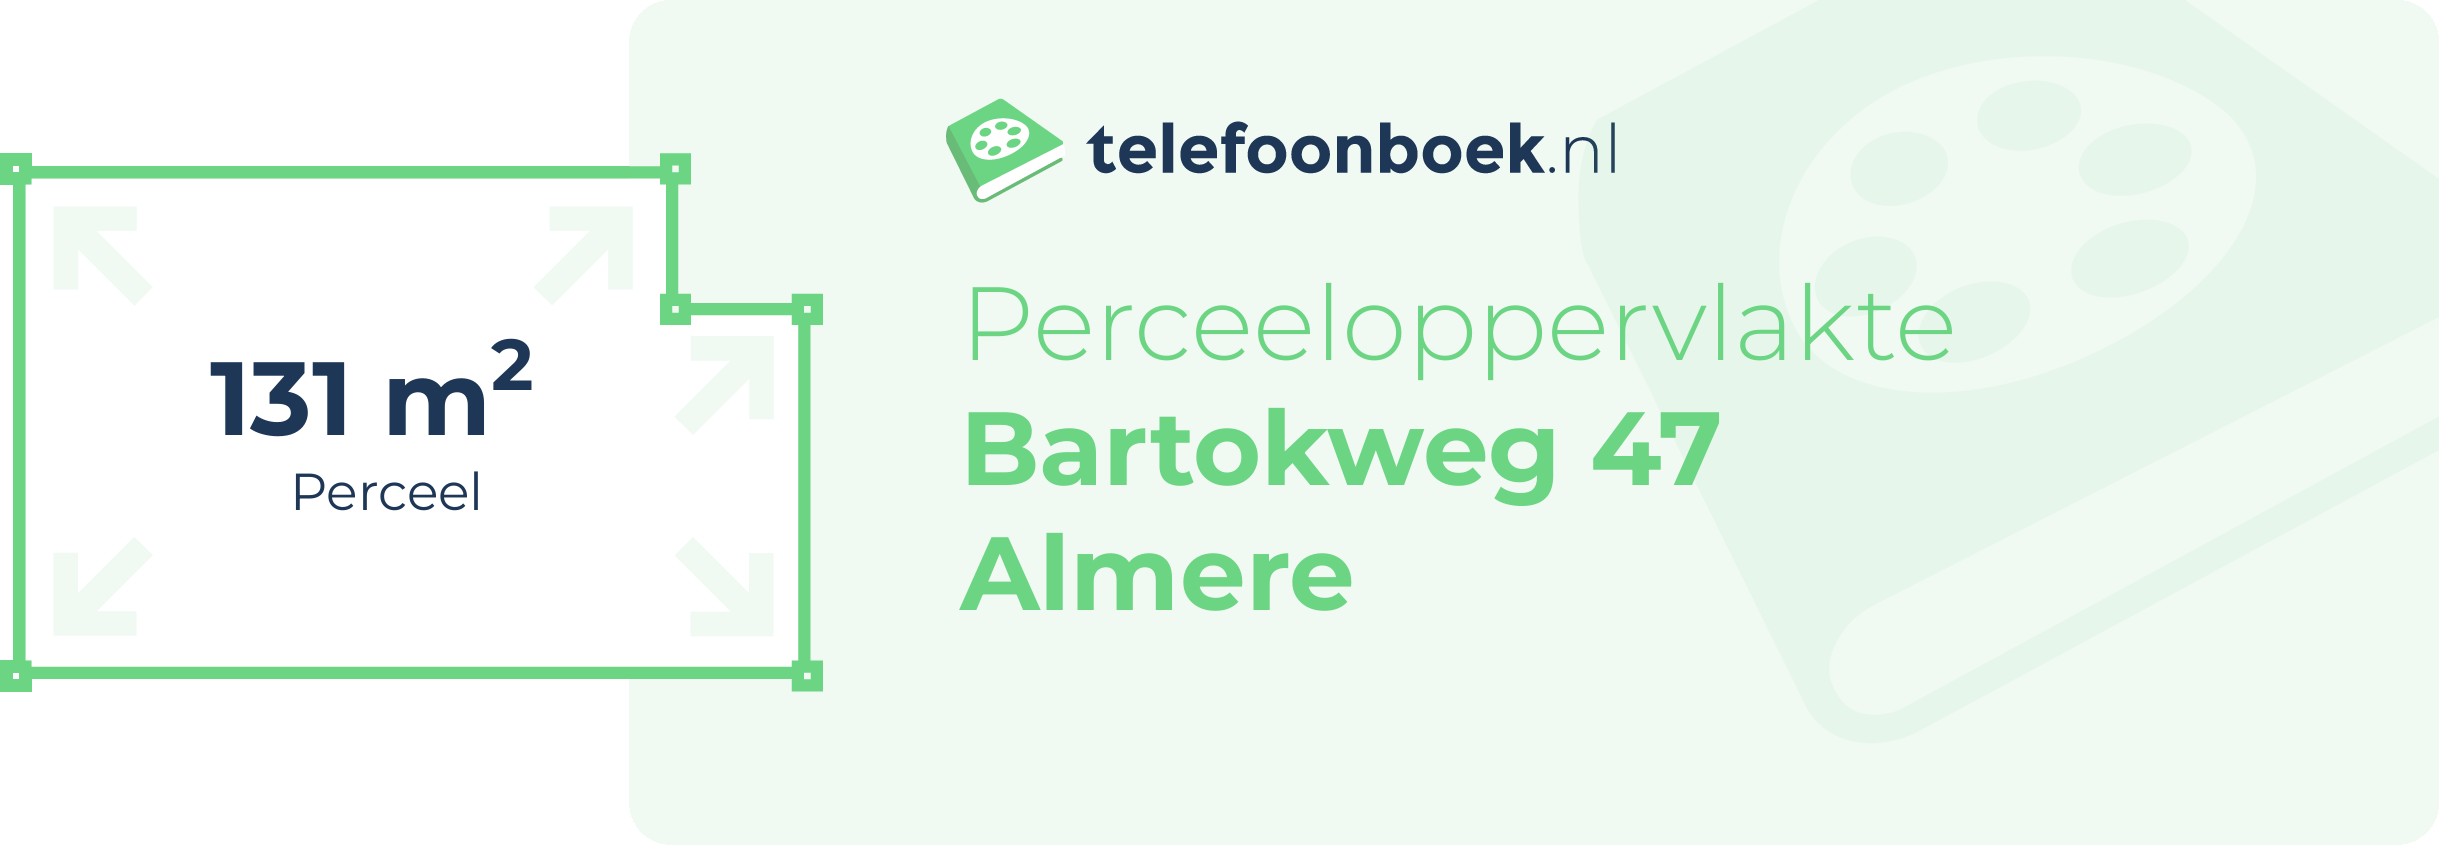 Perceeloppervlakte Bartokweg 47 Almere